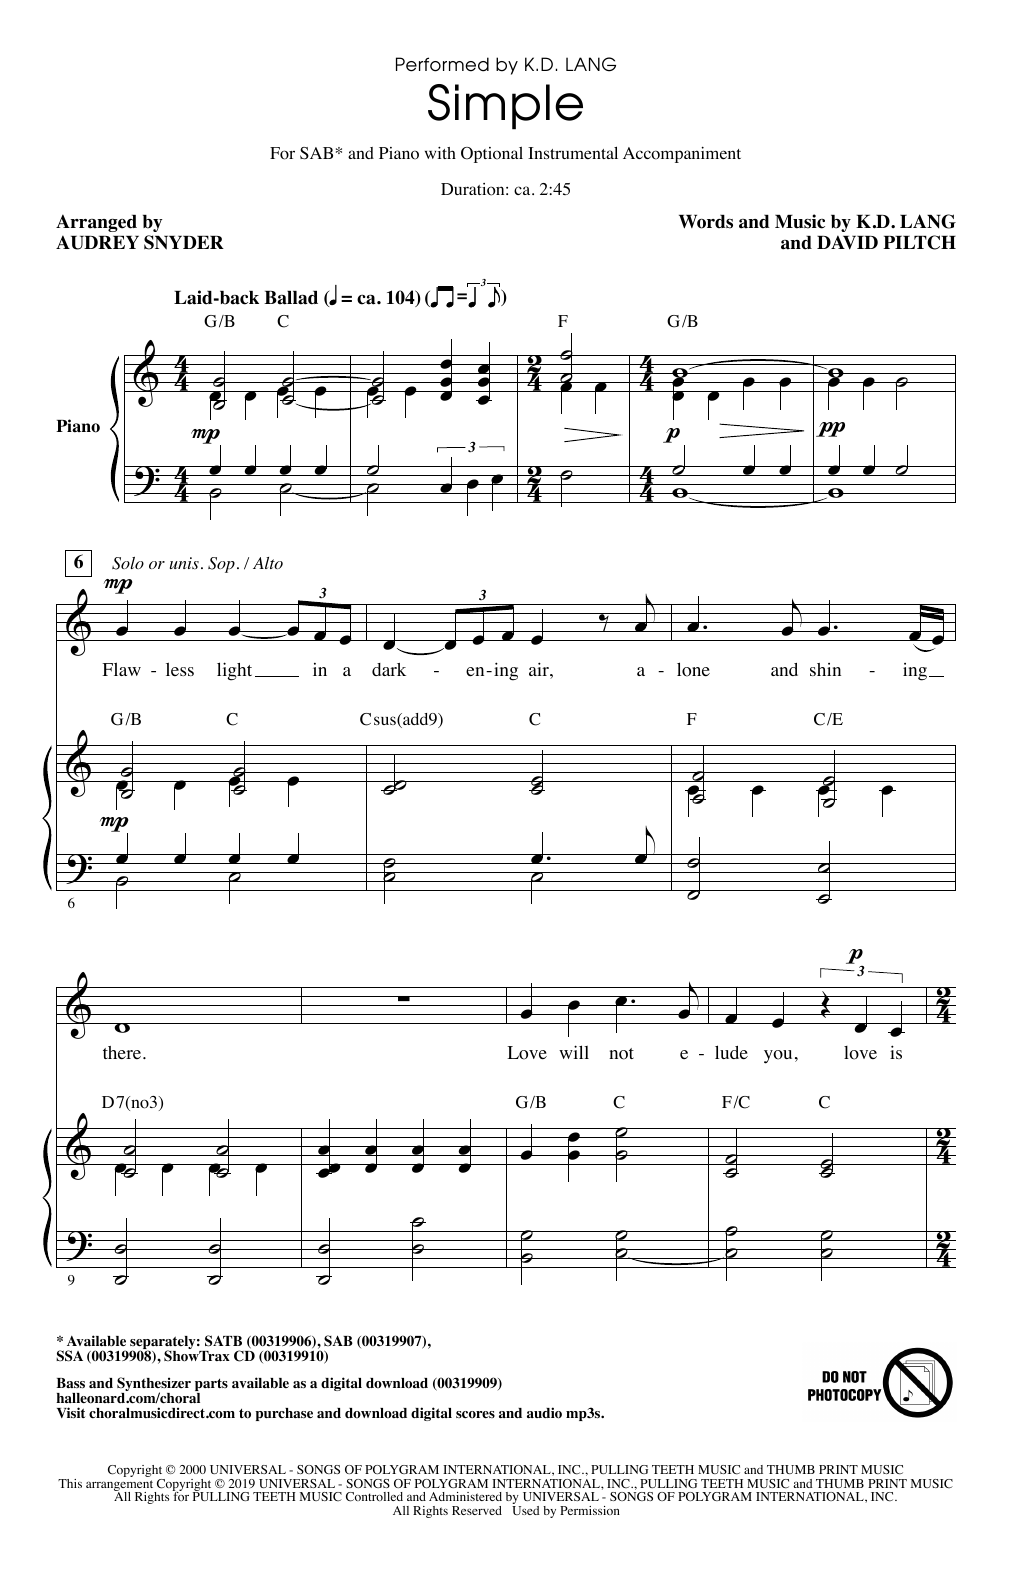 k.d. lang Simple (arr. Audrey Snyder) Sheet Music Notes & Chords for SSA Choir - Download or Print PDF